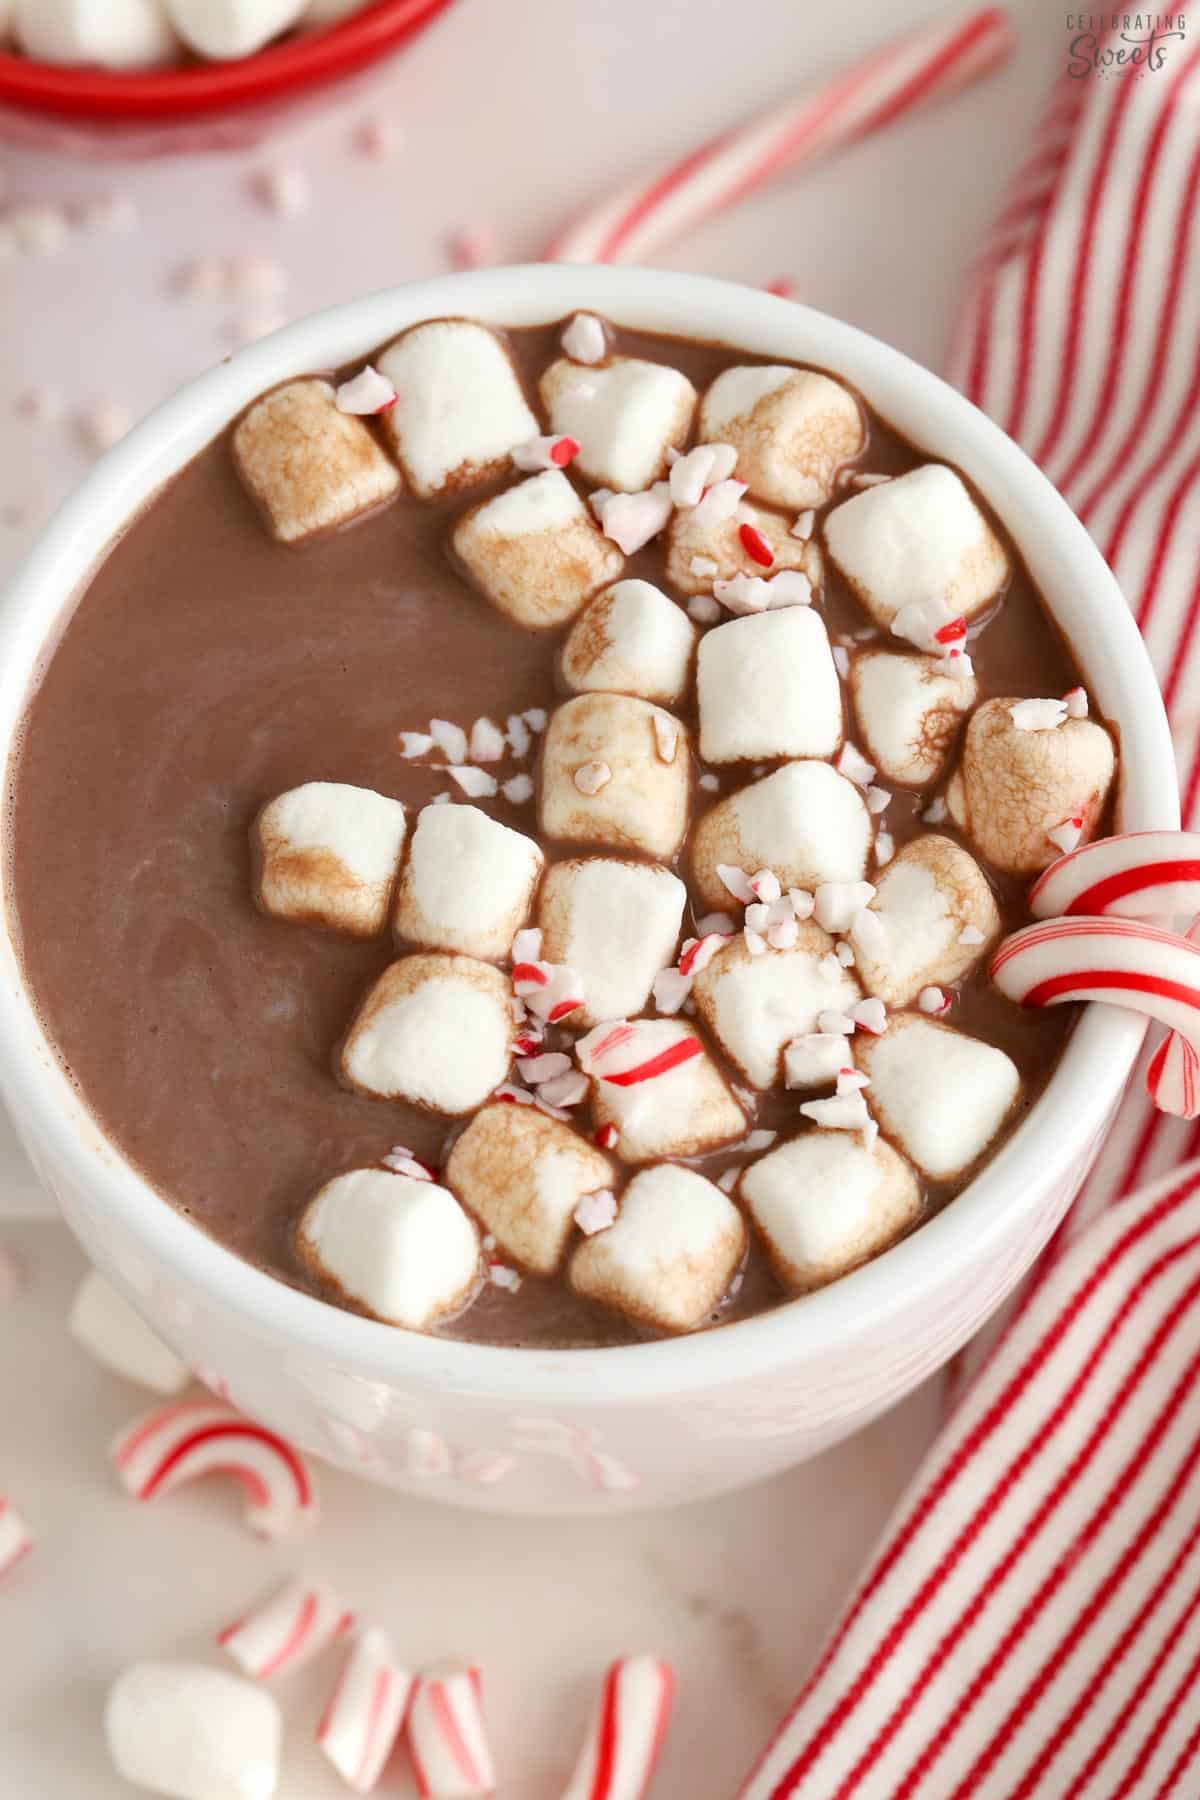 Peppermint hot chocolate in a white mug